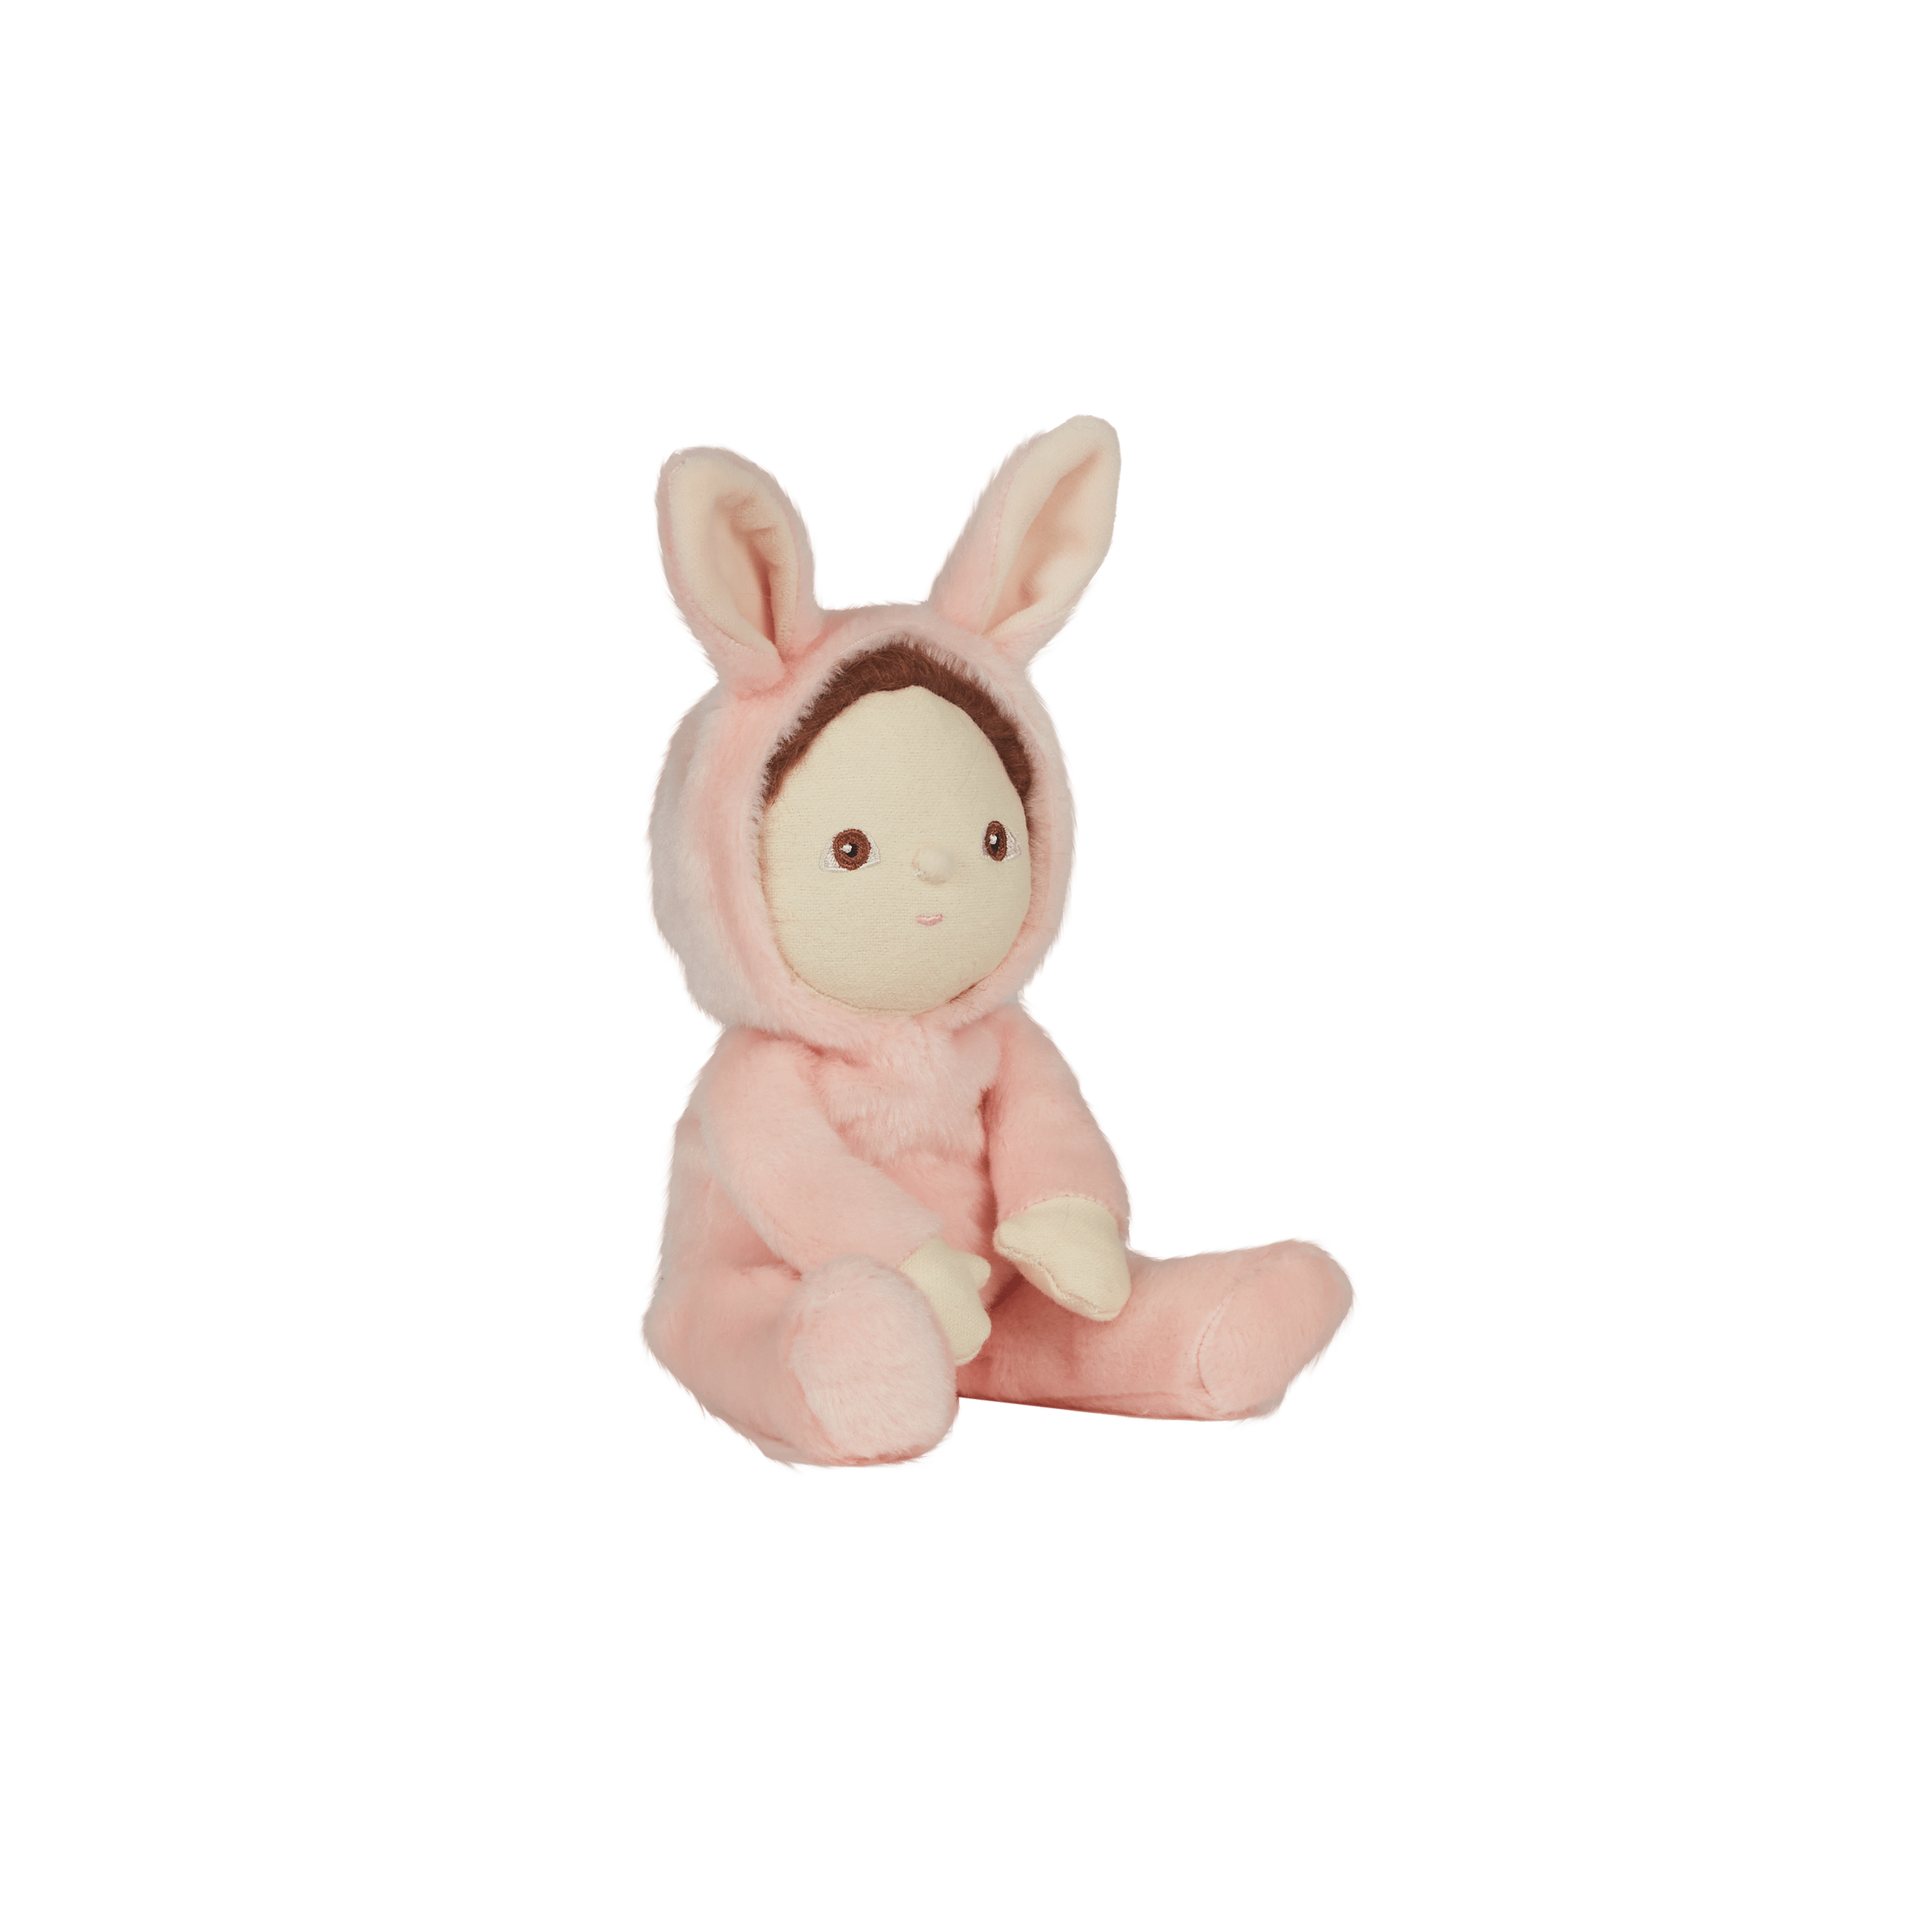 Dinky Dinkum Fluffles Doll - Bella Bunny Olli Ella Lil Tulips